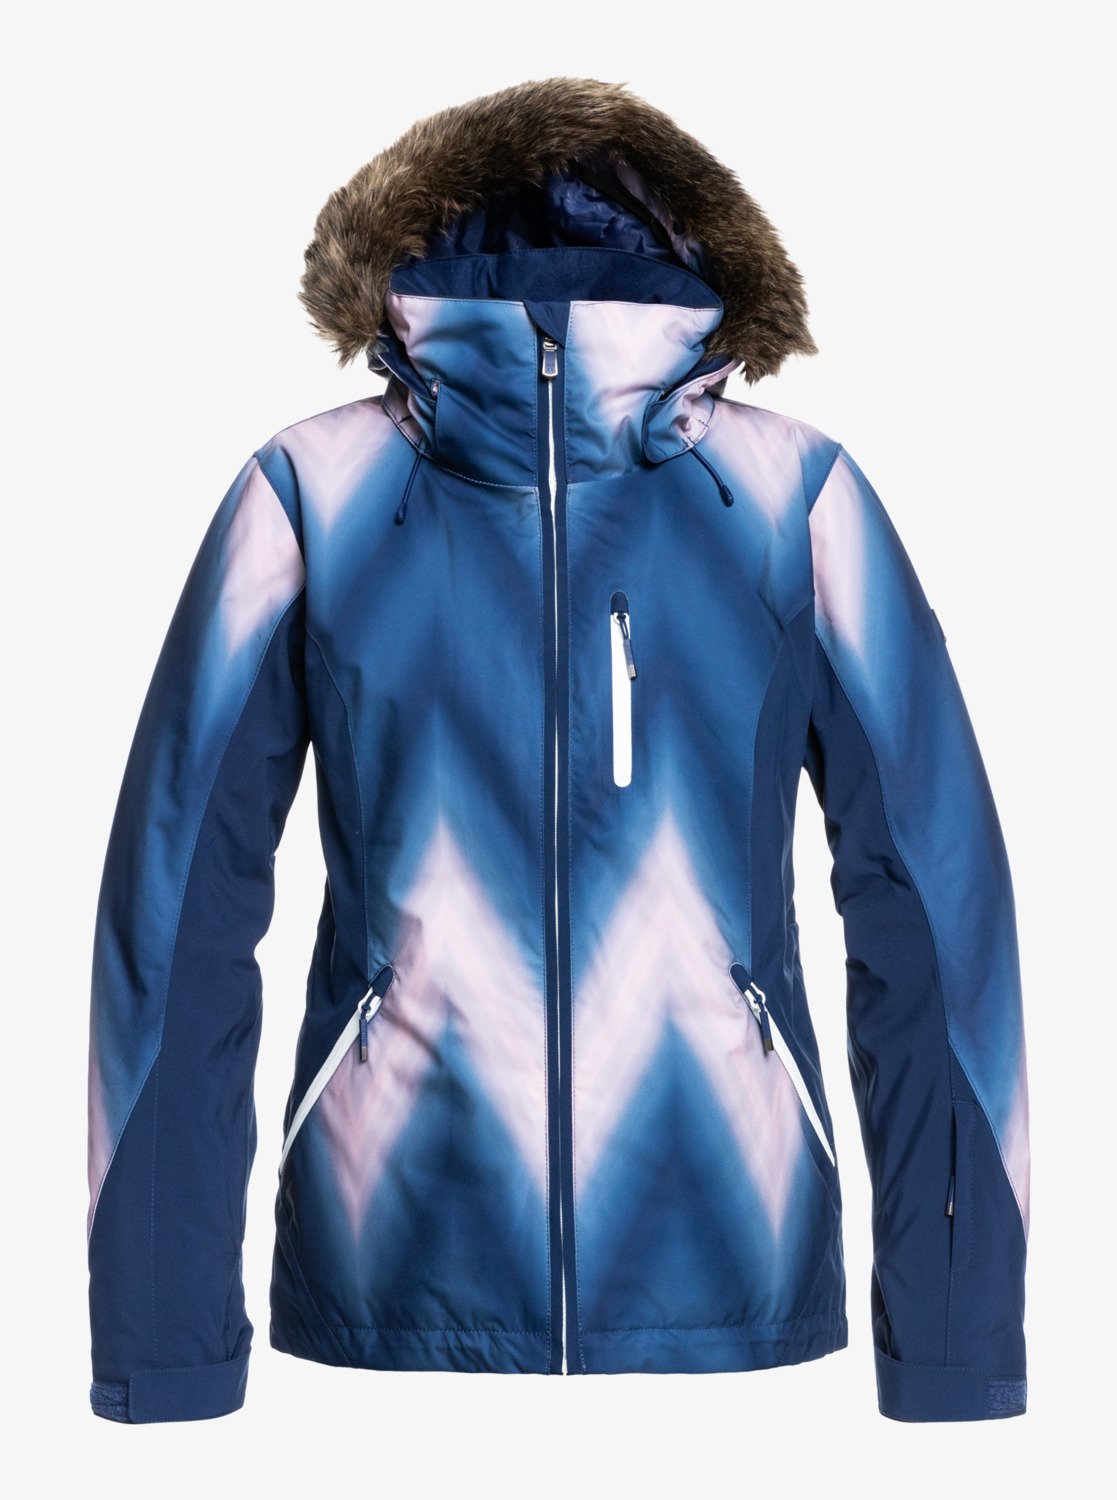 Roxy Jet Ski Premium Snow Jacket - Auski Australia